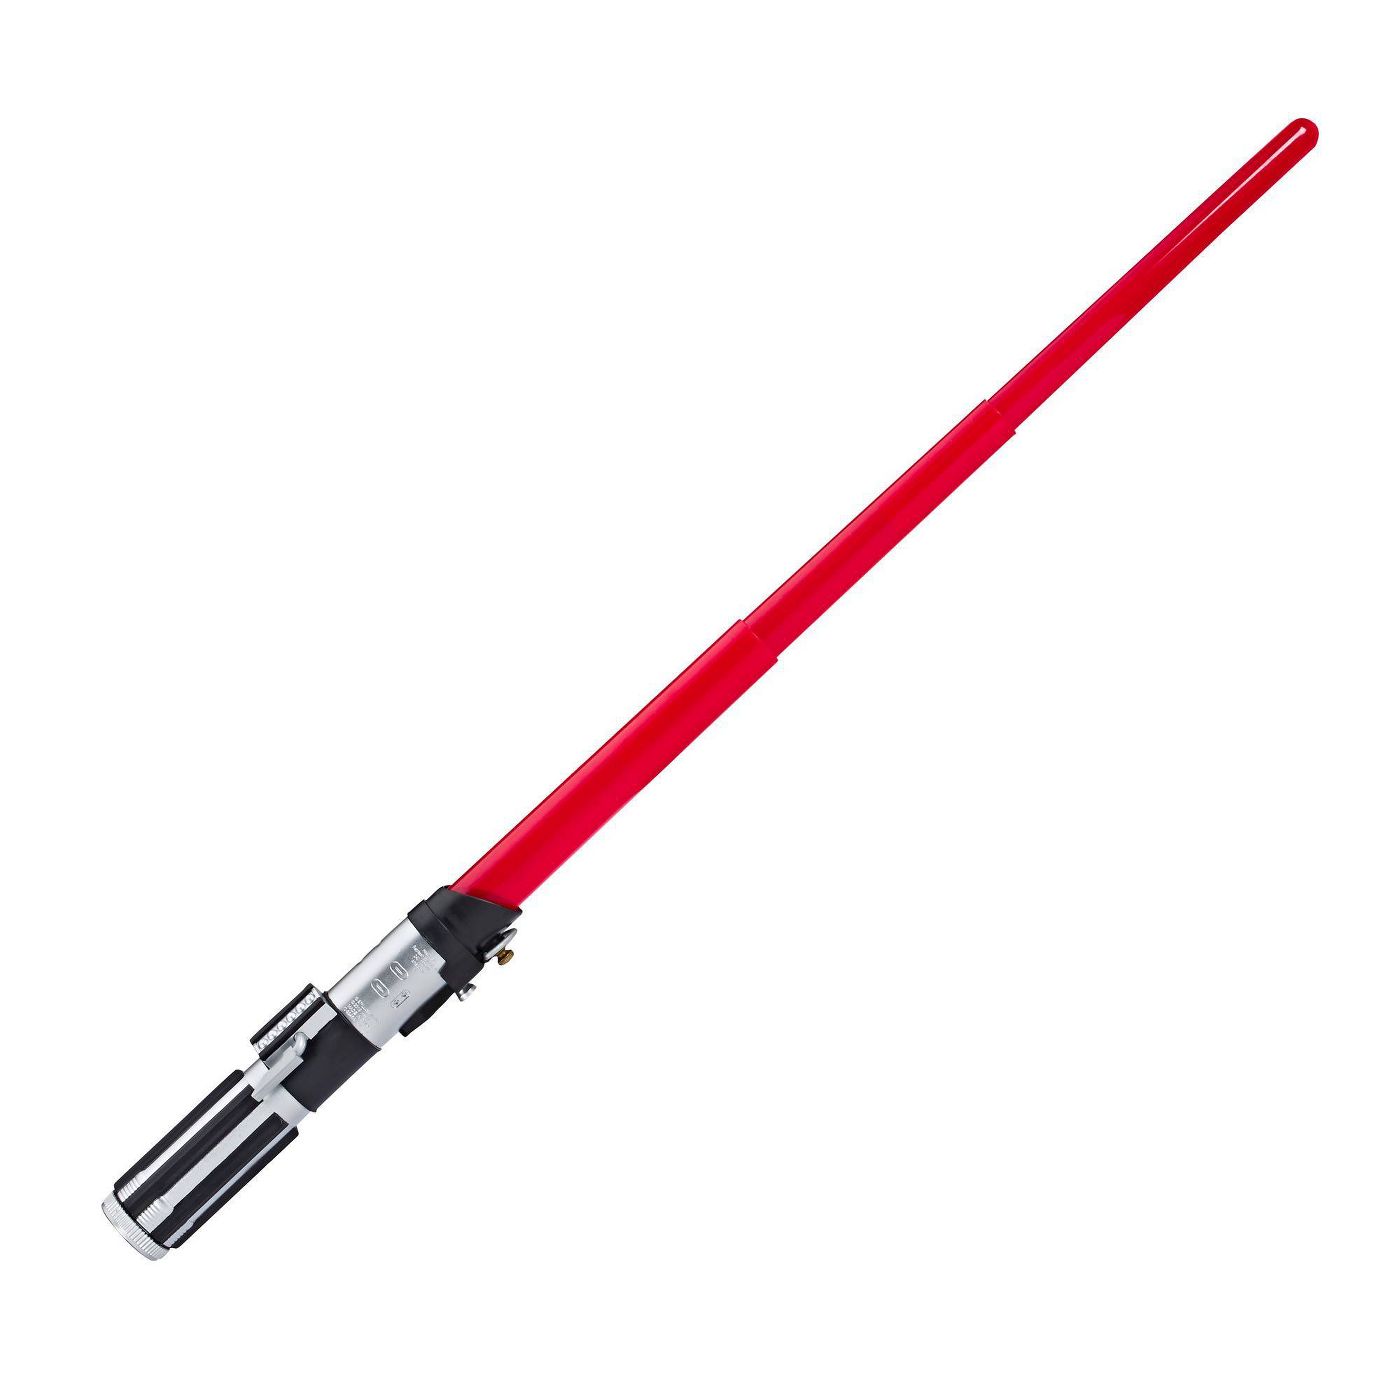 TROS Darth Vader Electronic Red Lightsaber Toy 4